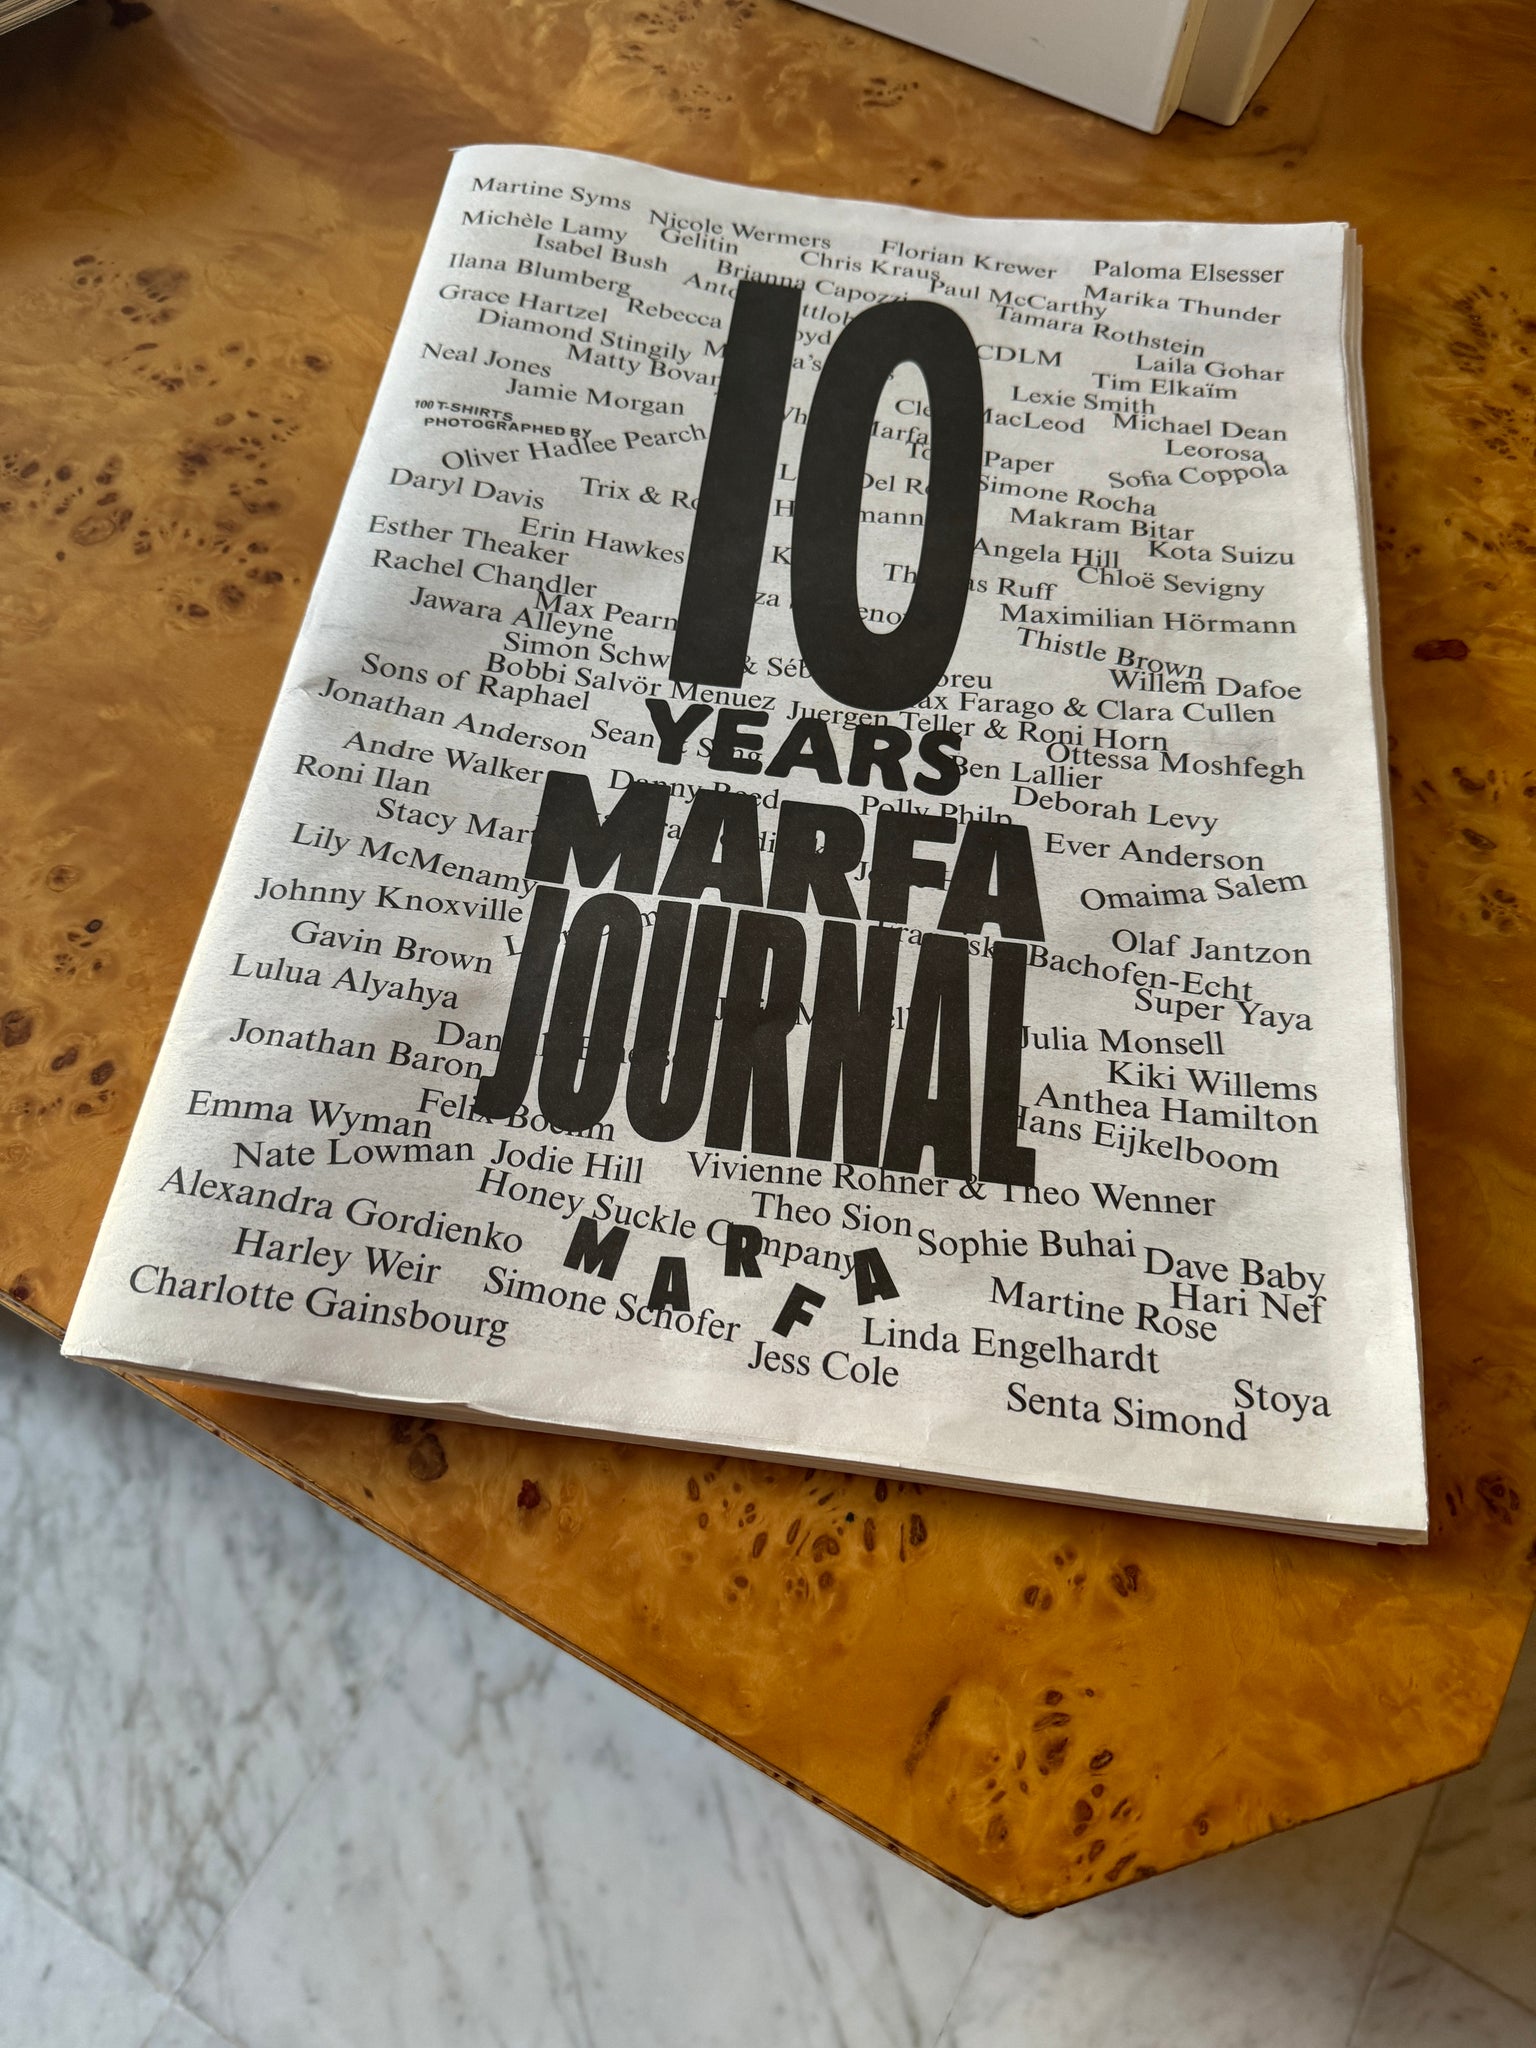 MARFA NEWSPAPER 10 YEARS